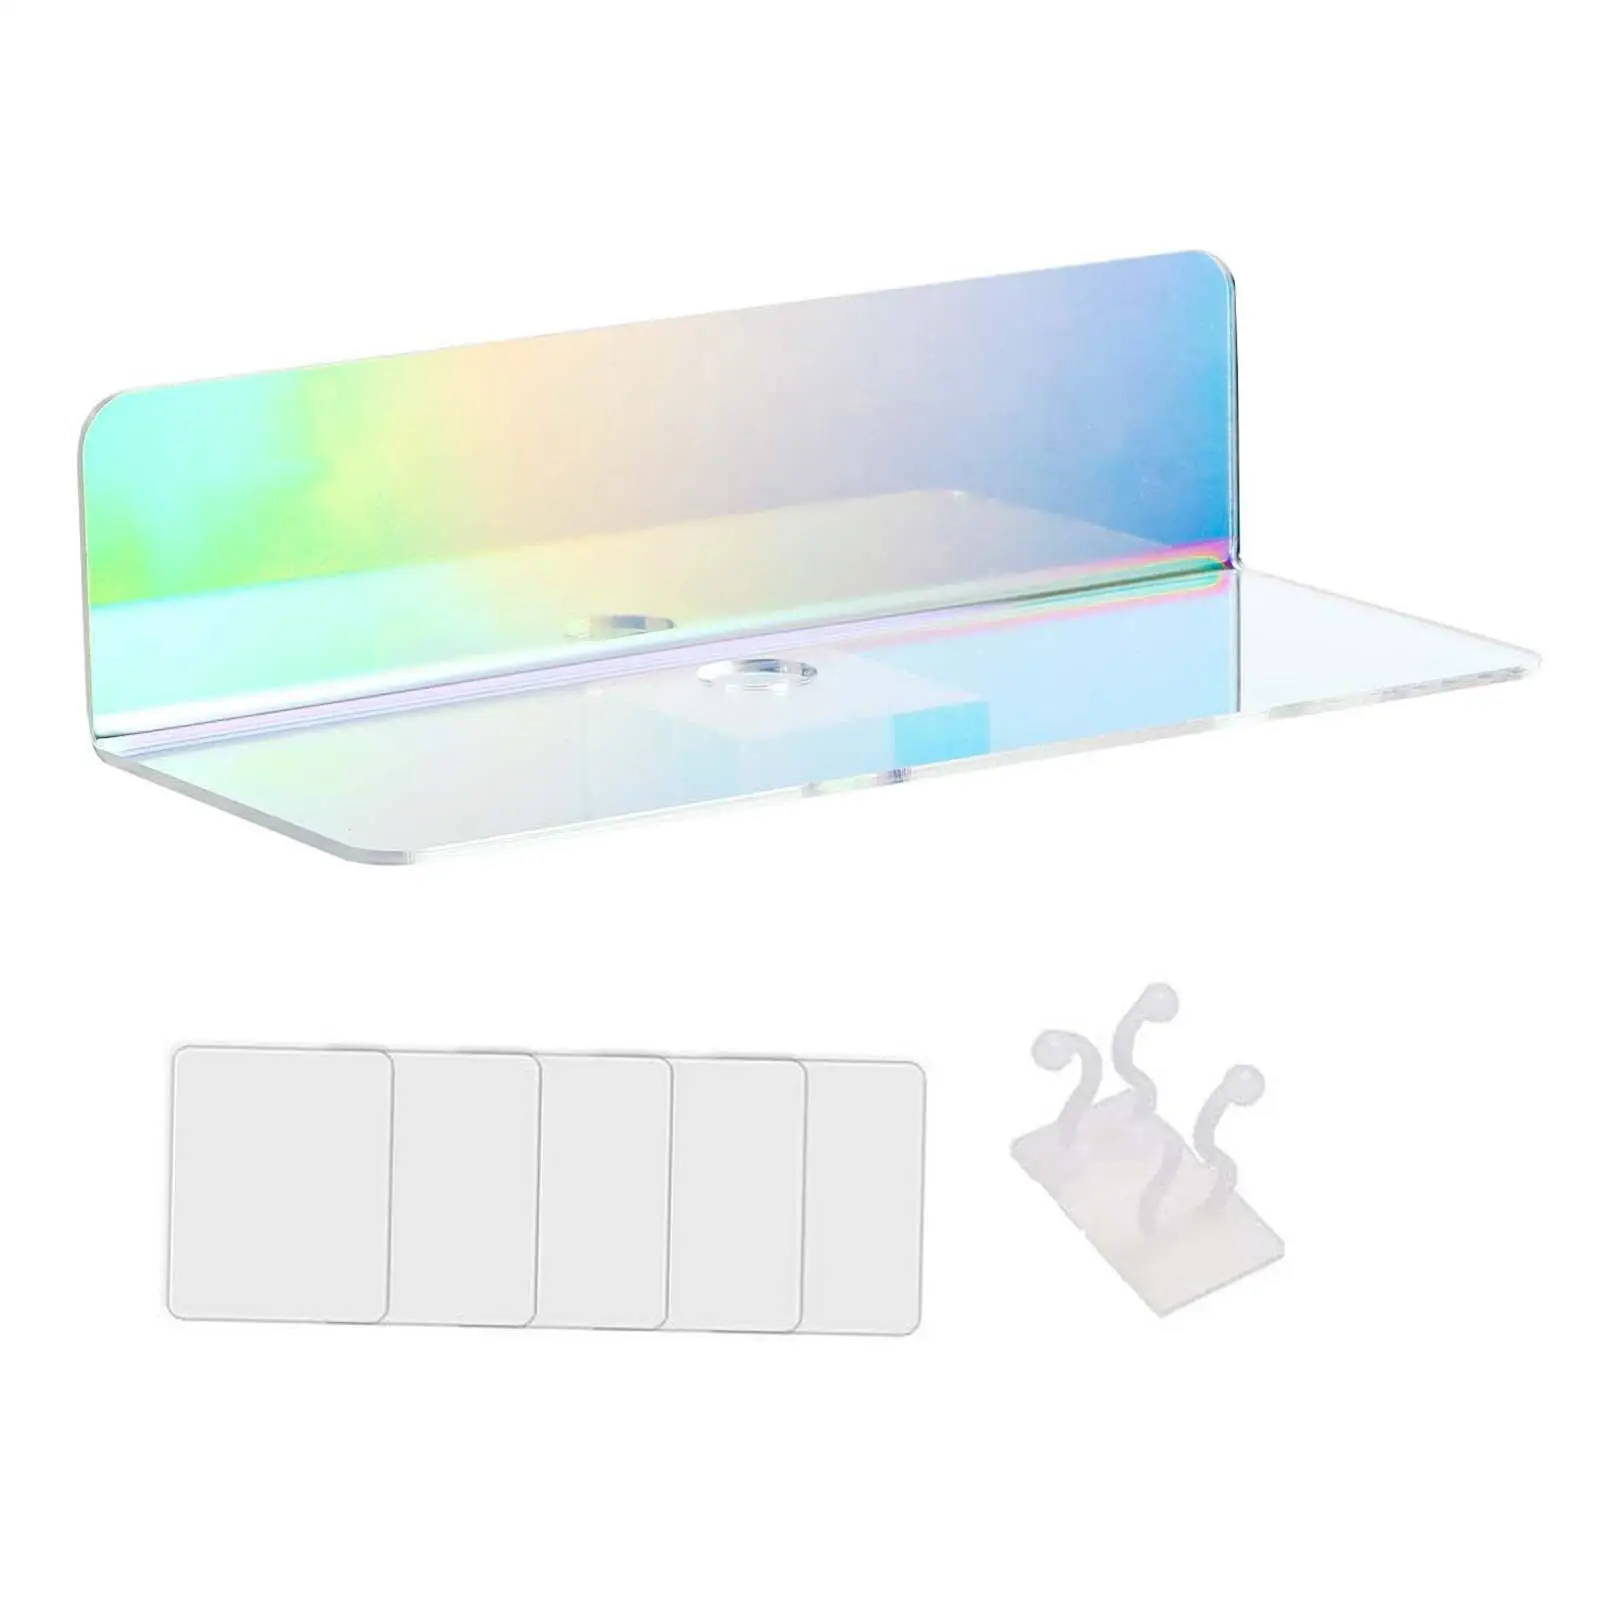 Acrylic Clear Floating Shelf Hanging Shelf Display Organizer 2 Methods to